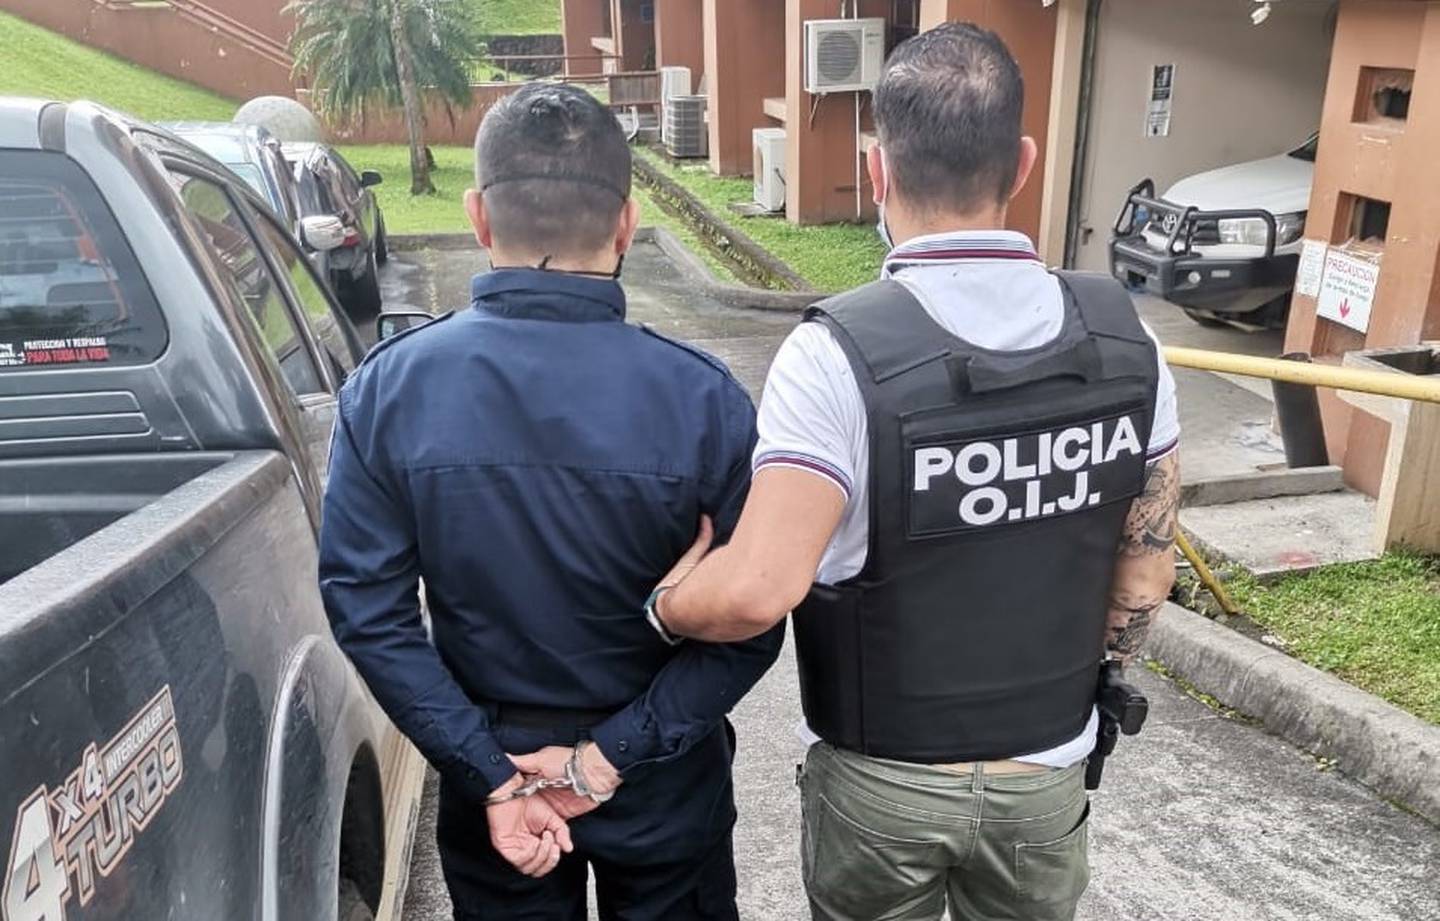 Policía apellido Campos detenido como sospechoso de robar celular de ganadero asesinado. Foto OIJ.